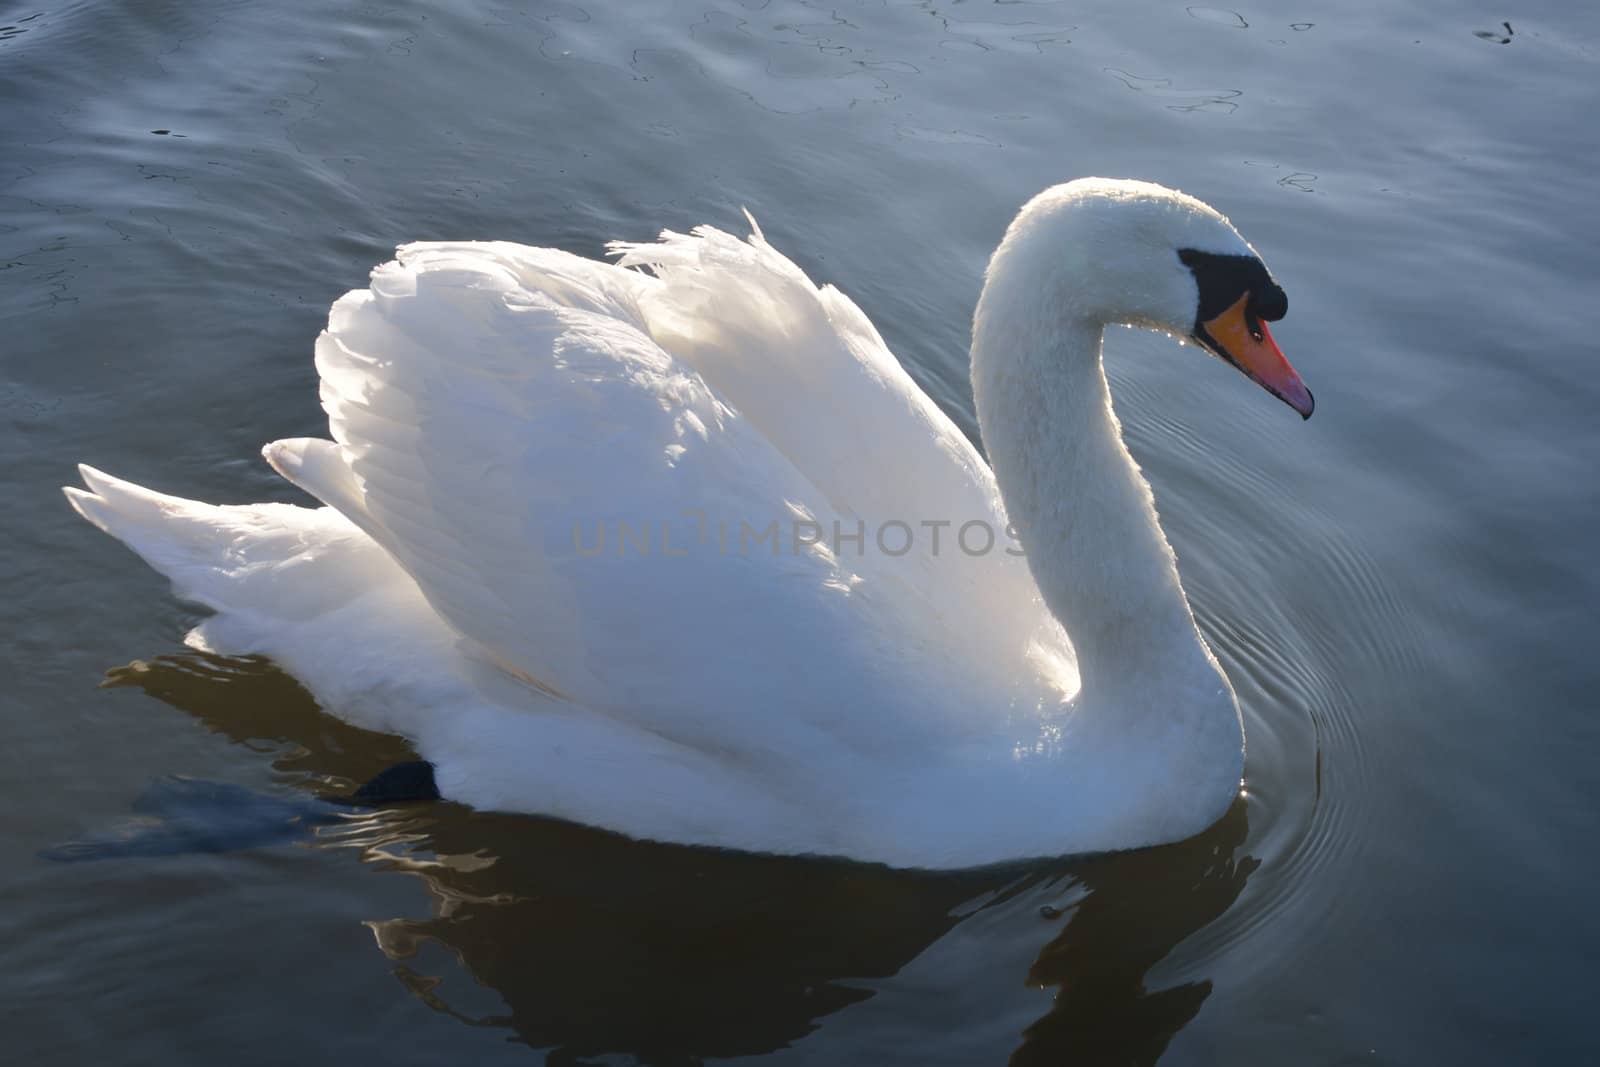 White swan in lake by pauws99